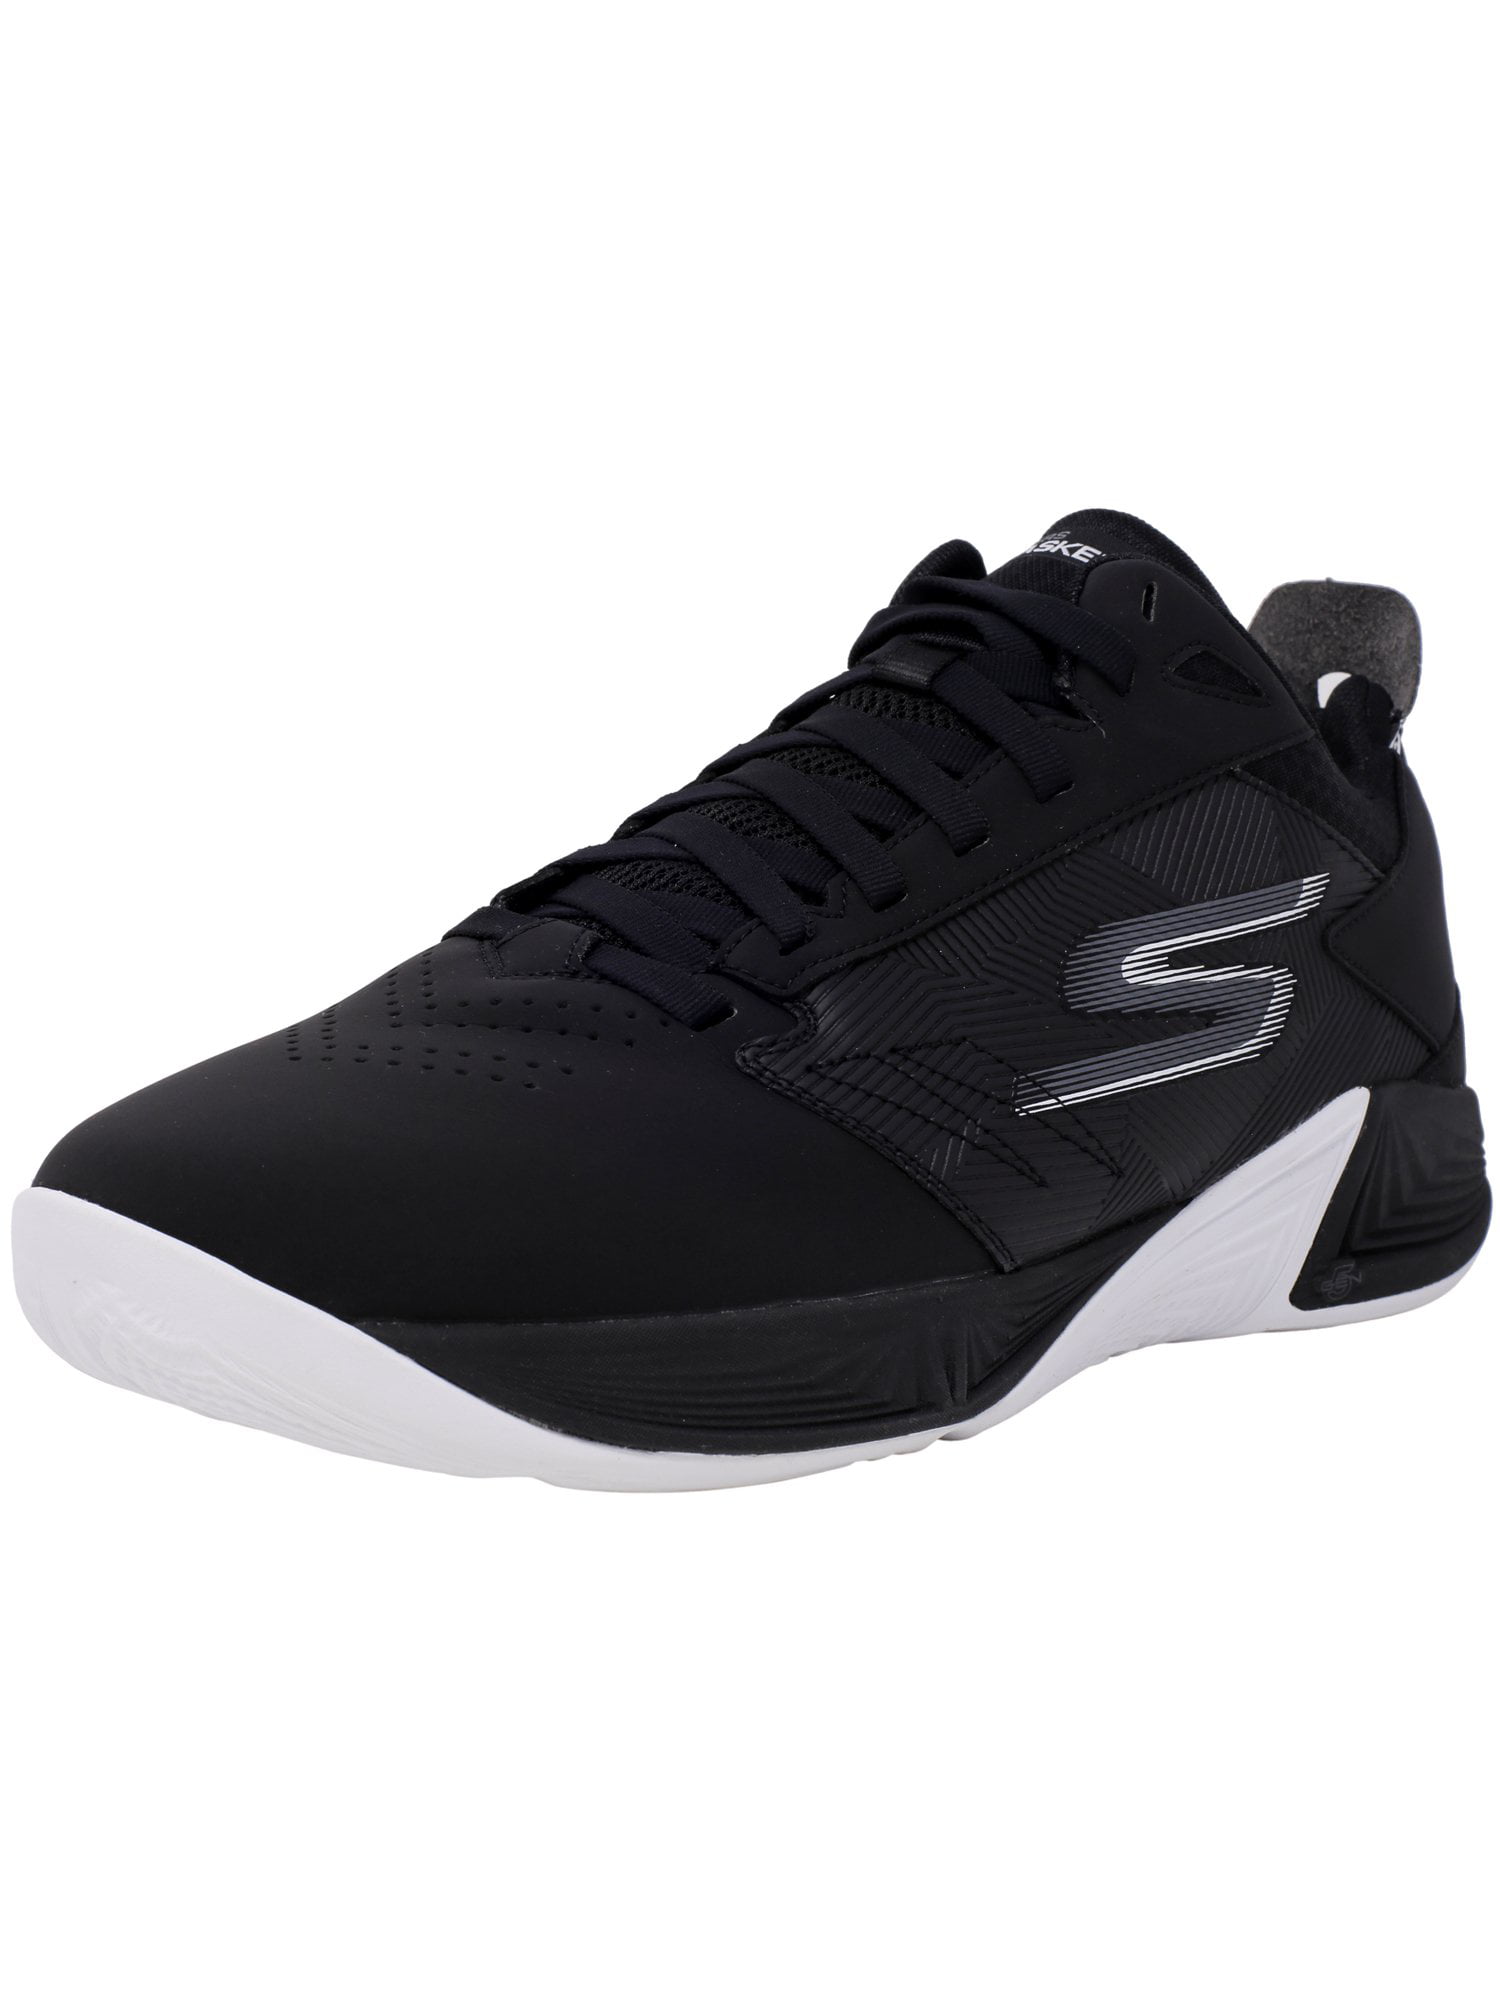 sketcher basketball shoes